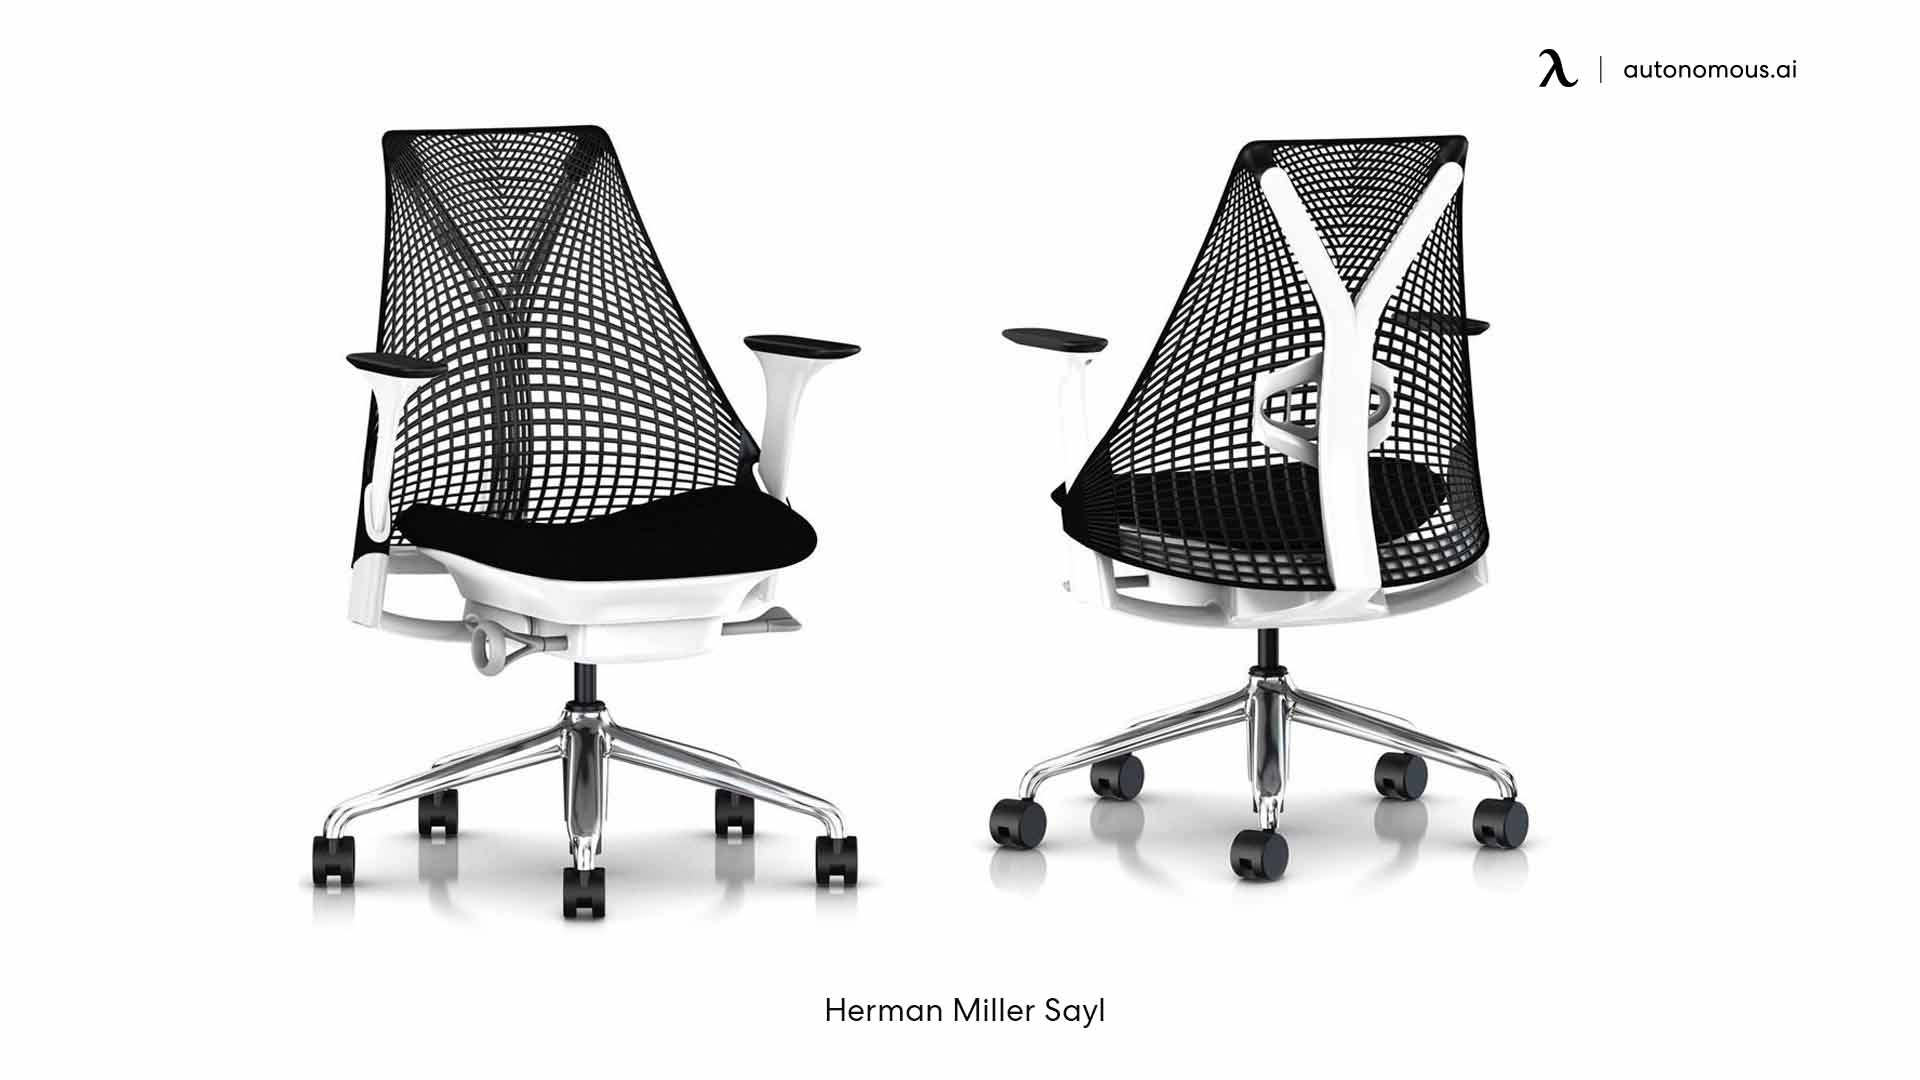 Herman Miller Sayl high back office chair